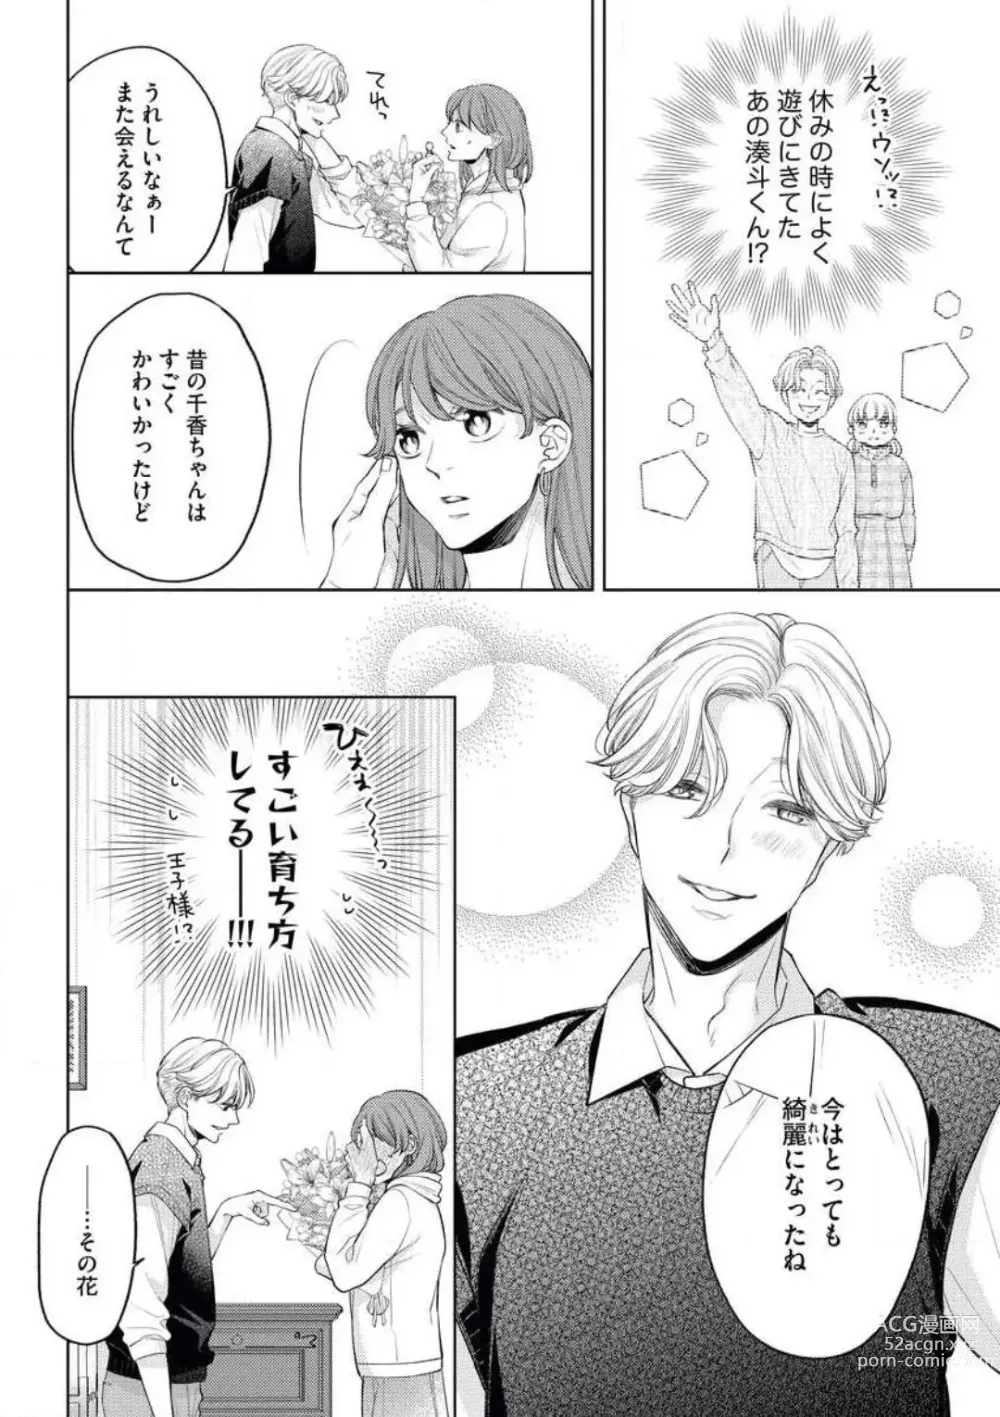 Page 7 of manga Sepia-iro no Koi ga Irozuku Toki